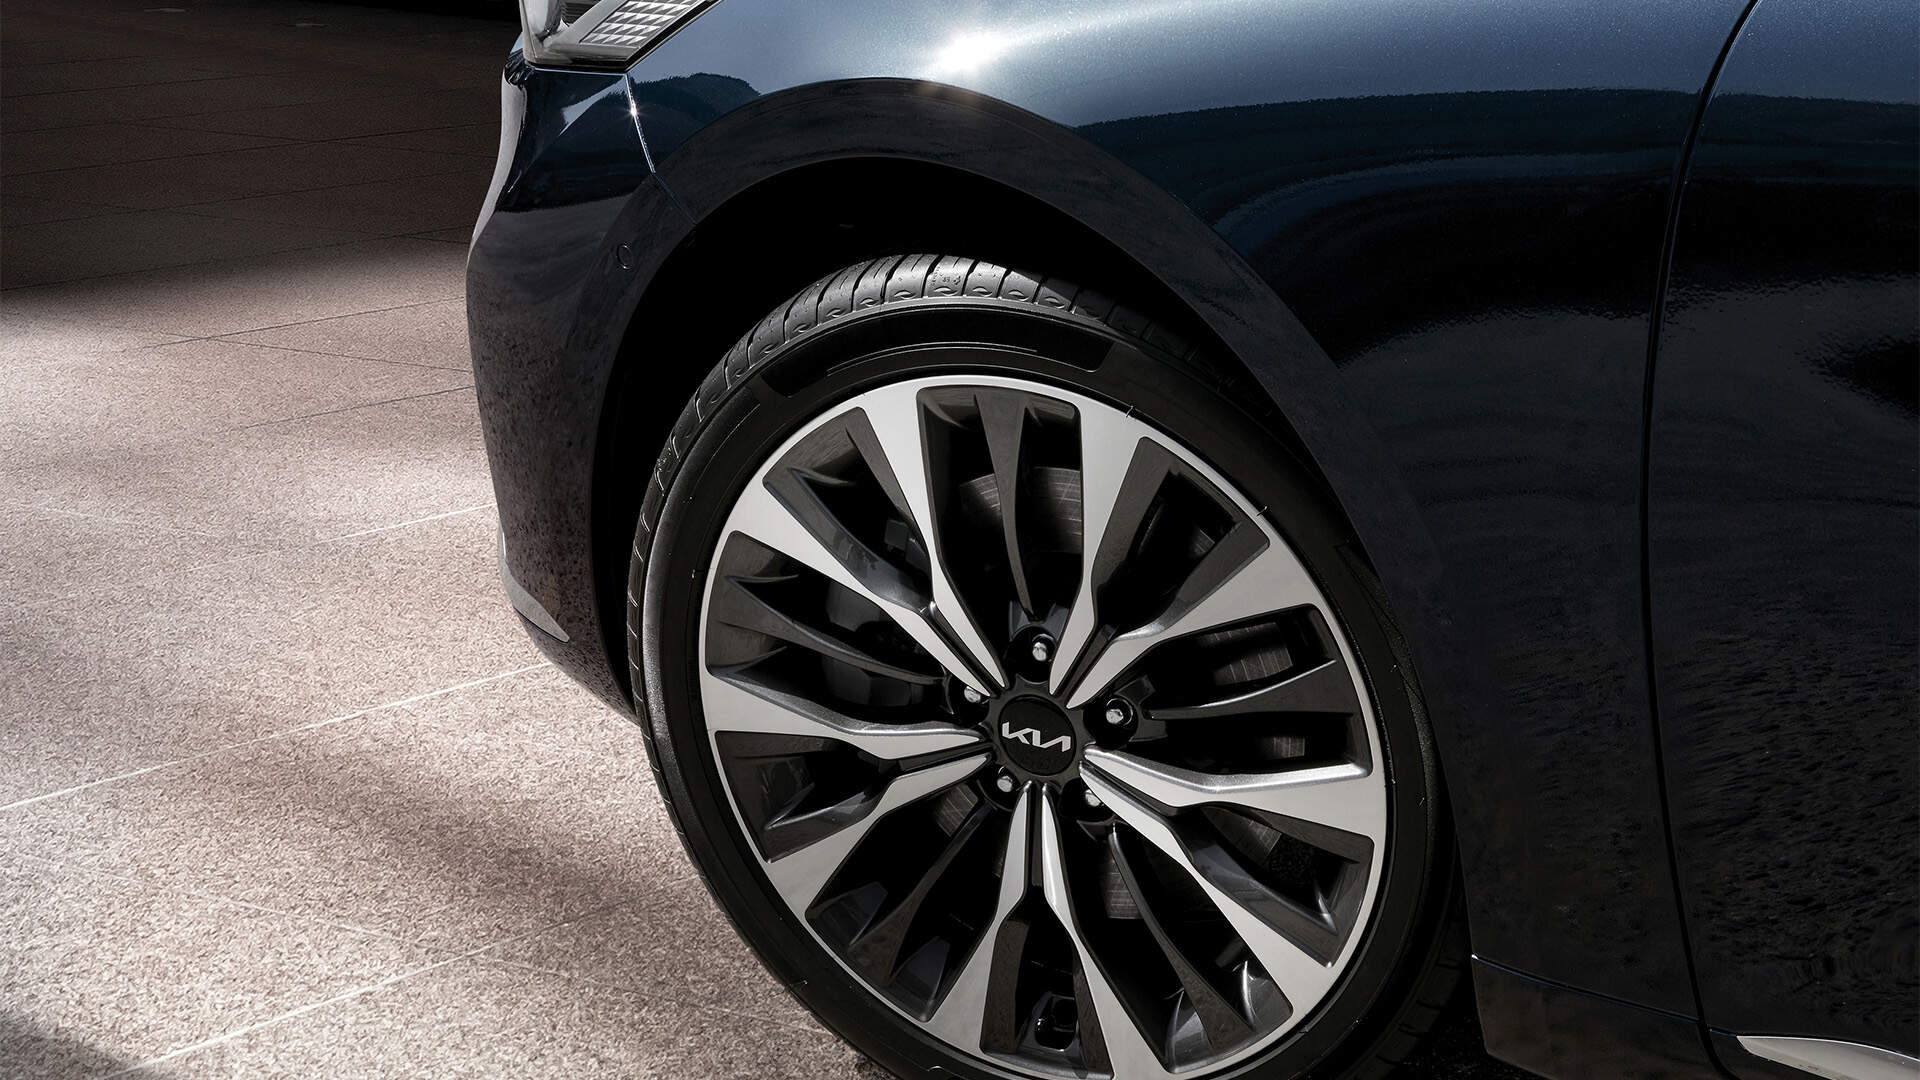 Close-up: Kia vehicle's front left tyre